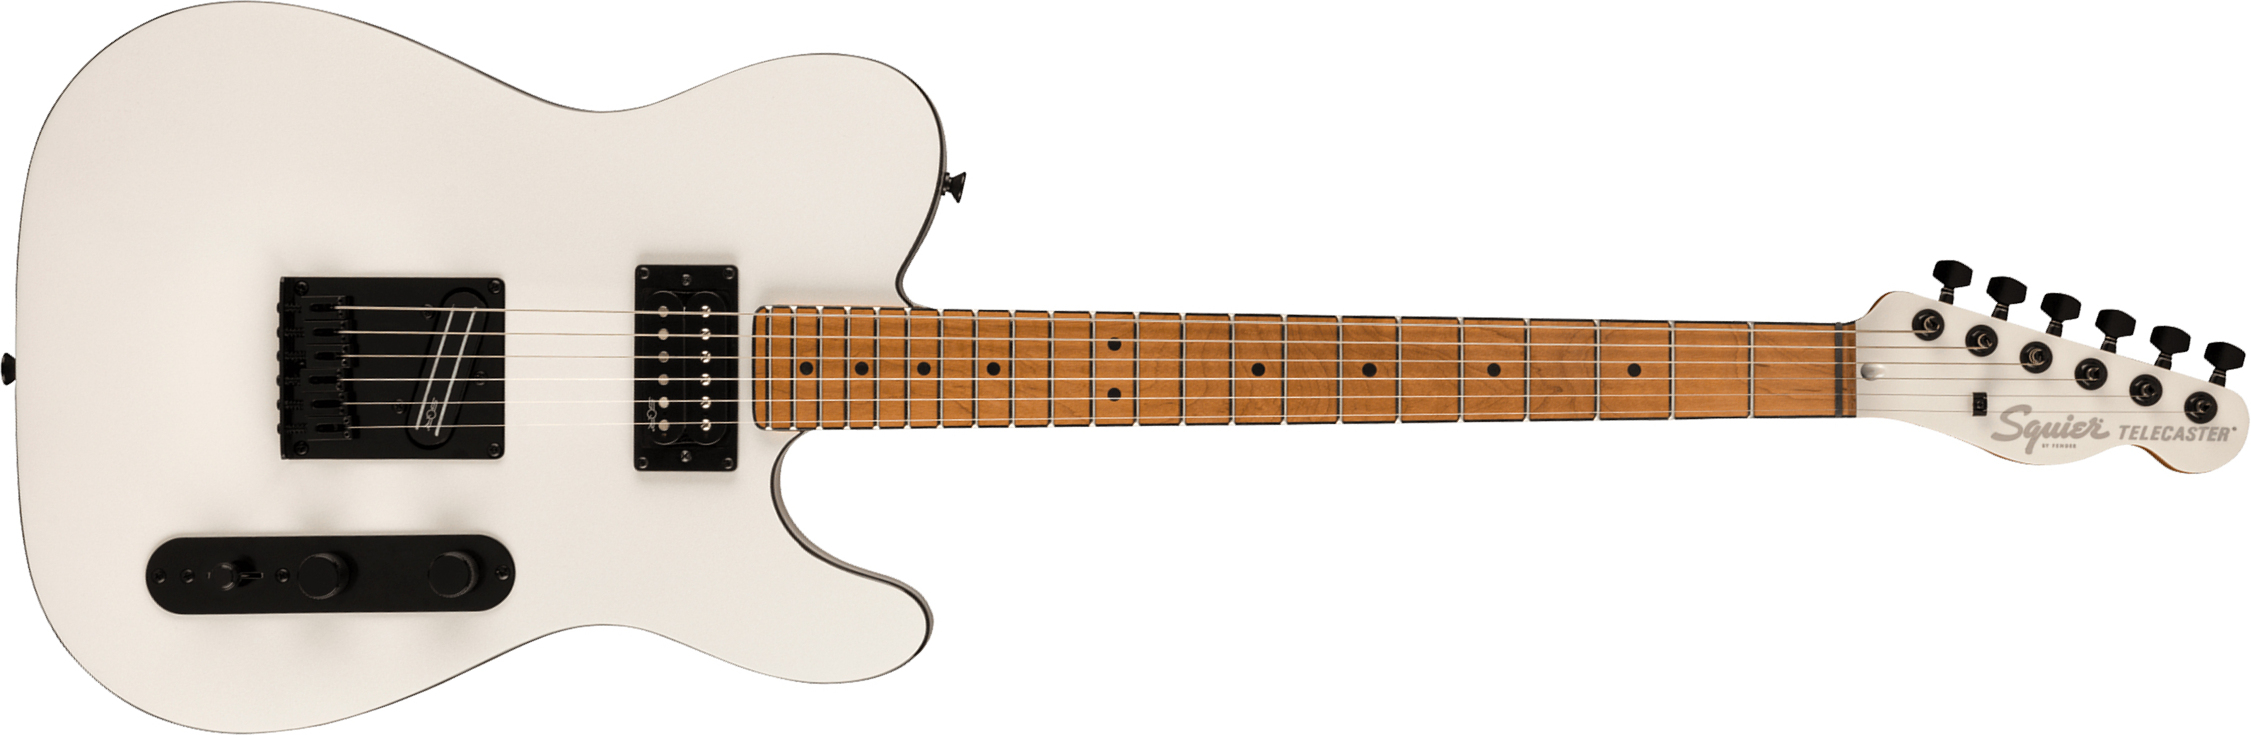 Squier Tele Contemporary Rh Hh Ht Mn - Pearl White - Televorm elektrische gitaar - Main picture